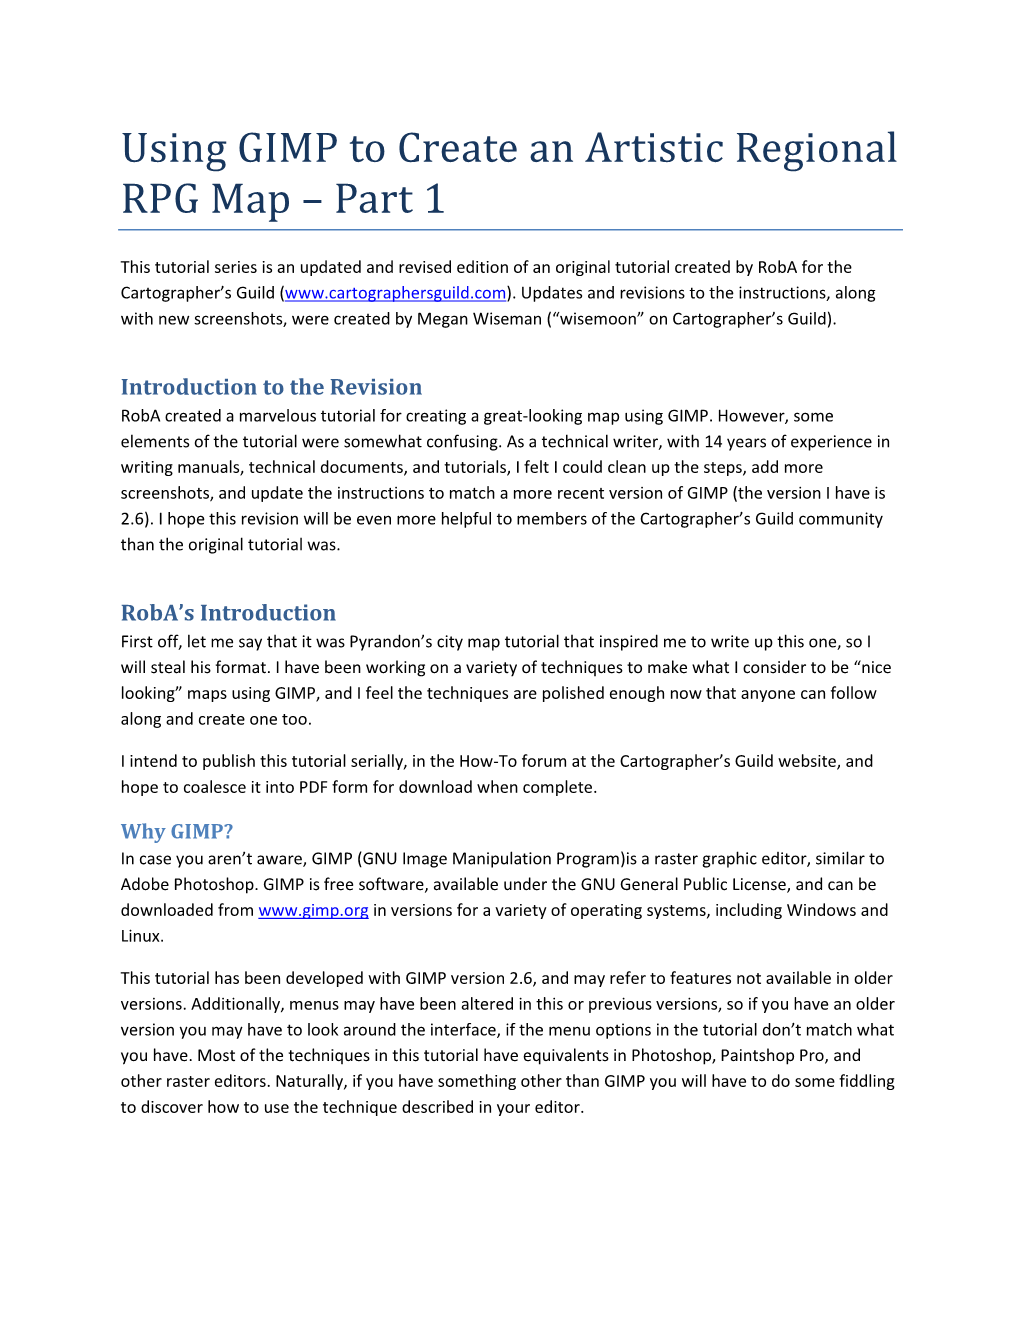 Using GIMP to Create an Artistic Regional RPG Map – Part 1